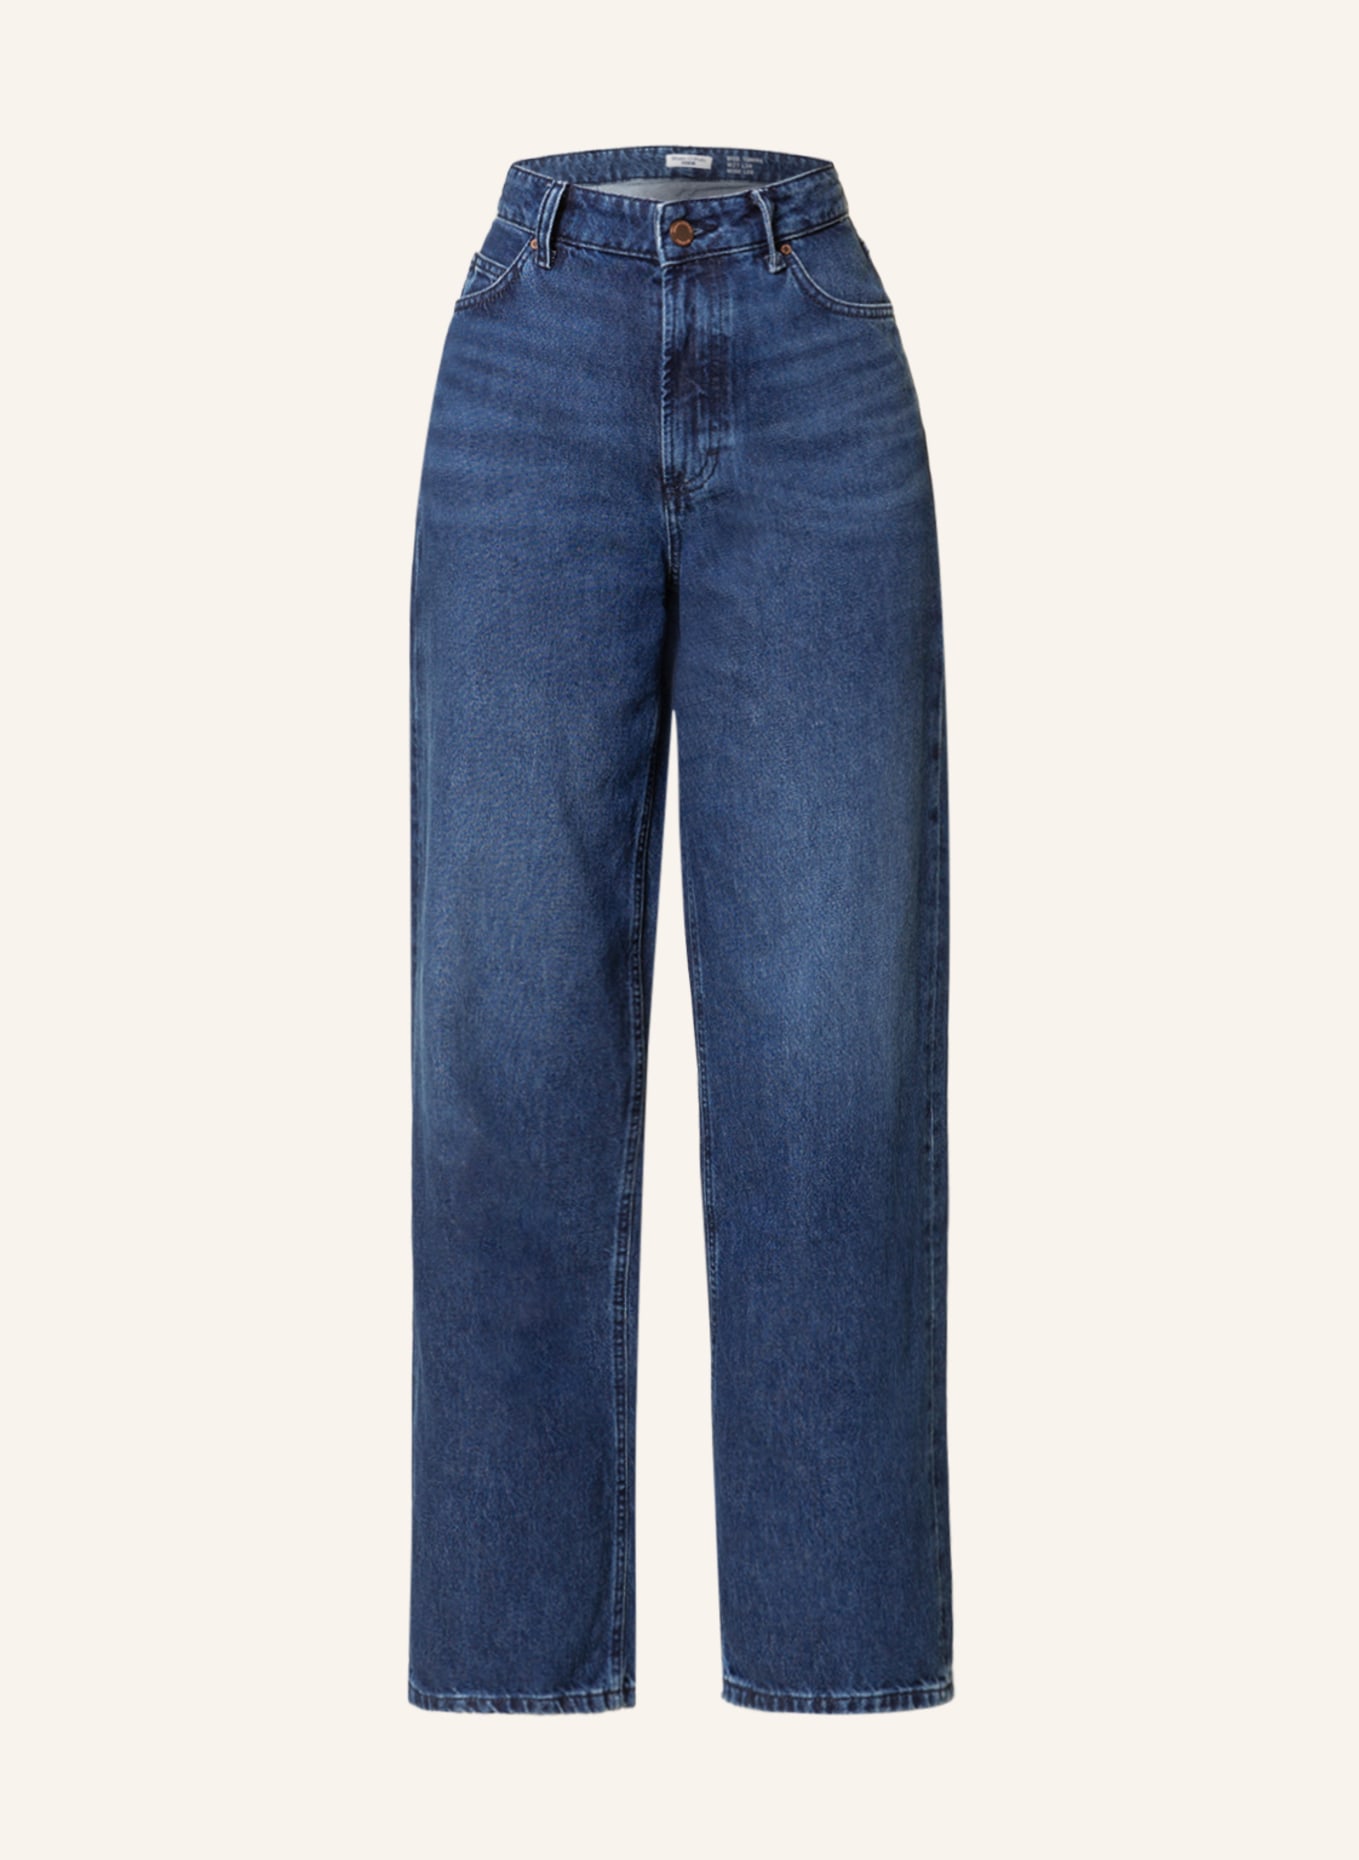 Marc O'Polo DENIM Flared Jeans, Farbe: Q20 multi/icy dark vintage blue (Bild 1)